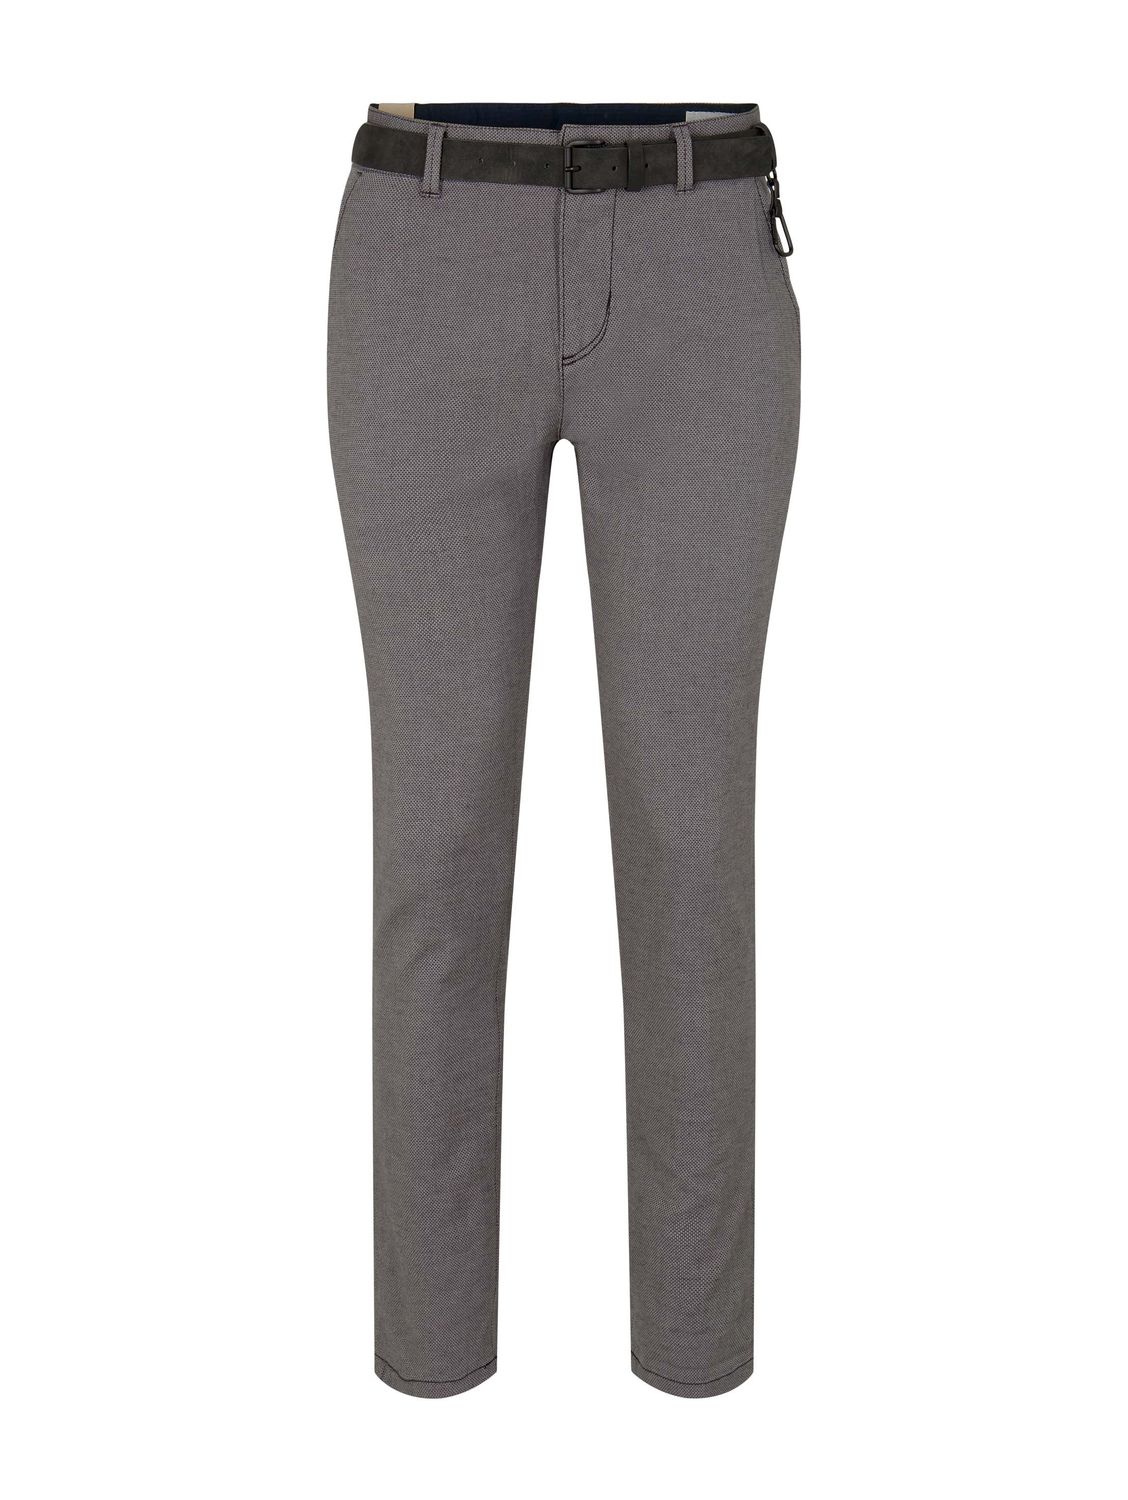 Тканевые брюки TOM TAILOR Denim Stoff/Chino Chino mit Gürtel regular/straight, серый рубашка tom tailor размер s серый